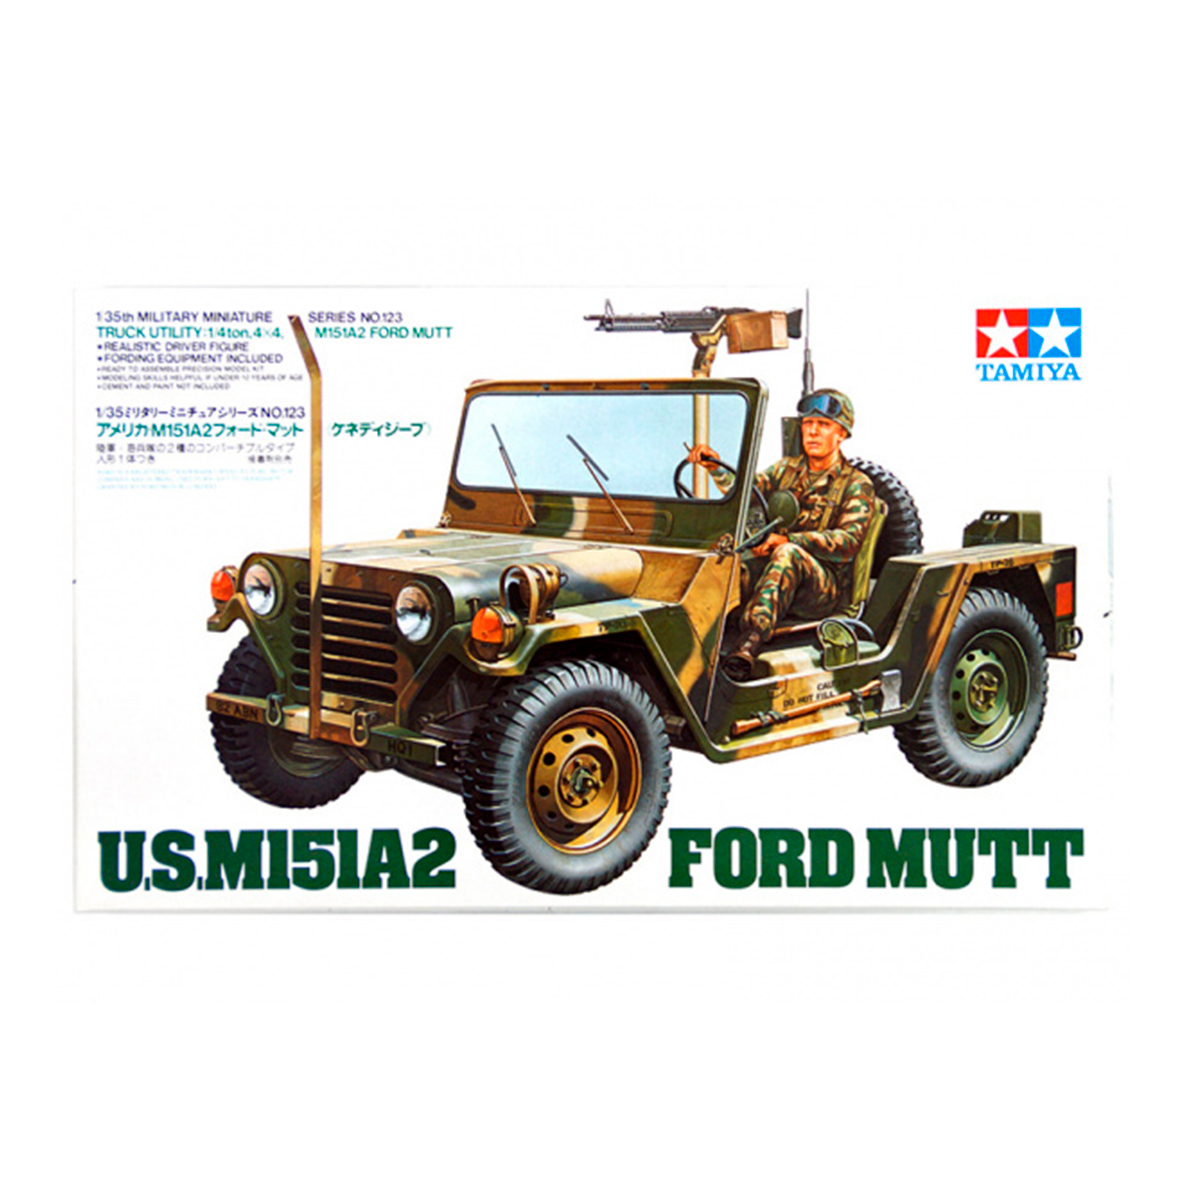 1/35 U.S. M151A2 FORD MUTT